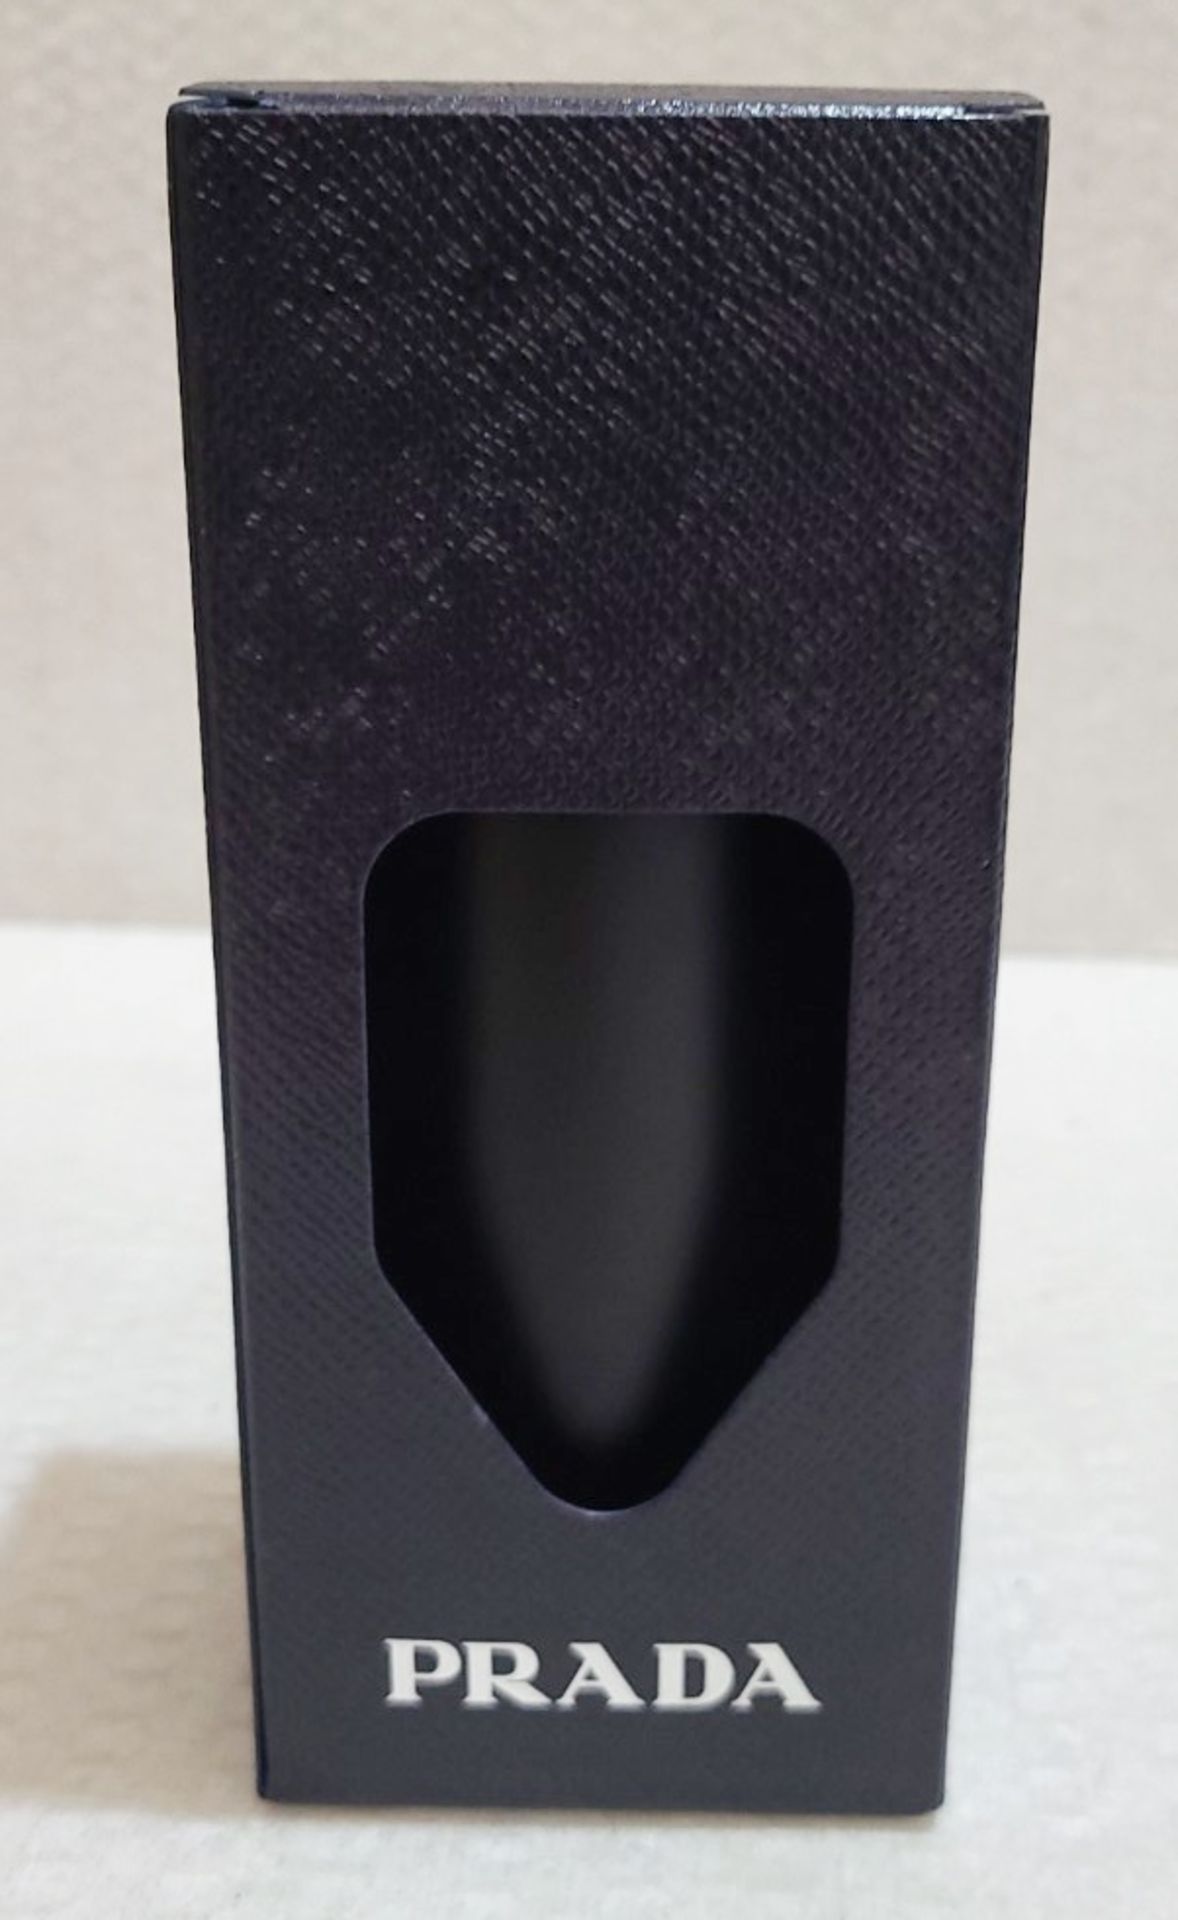 1 x PRADA Stainless Steel Insulated Water Bottle (350ml) - Original Price £85.00 - Image 4 of 5